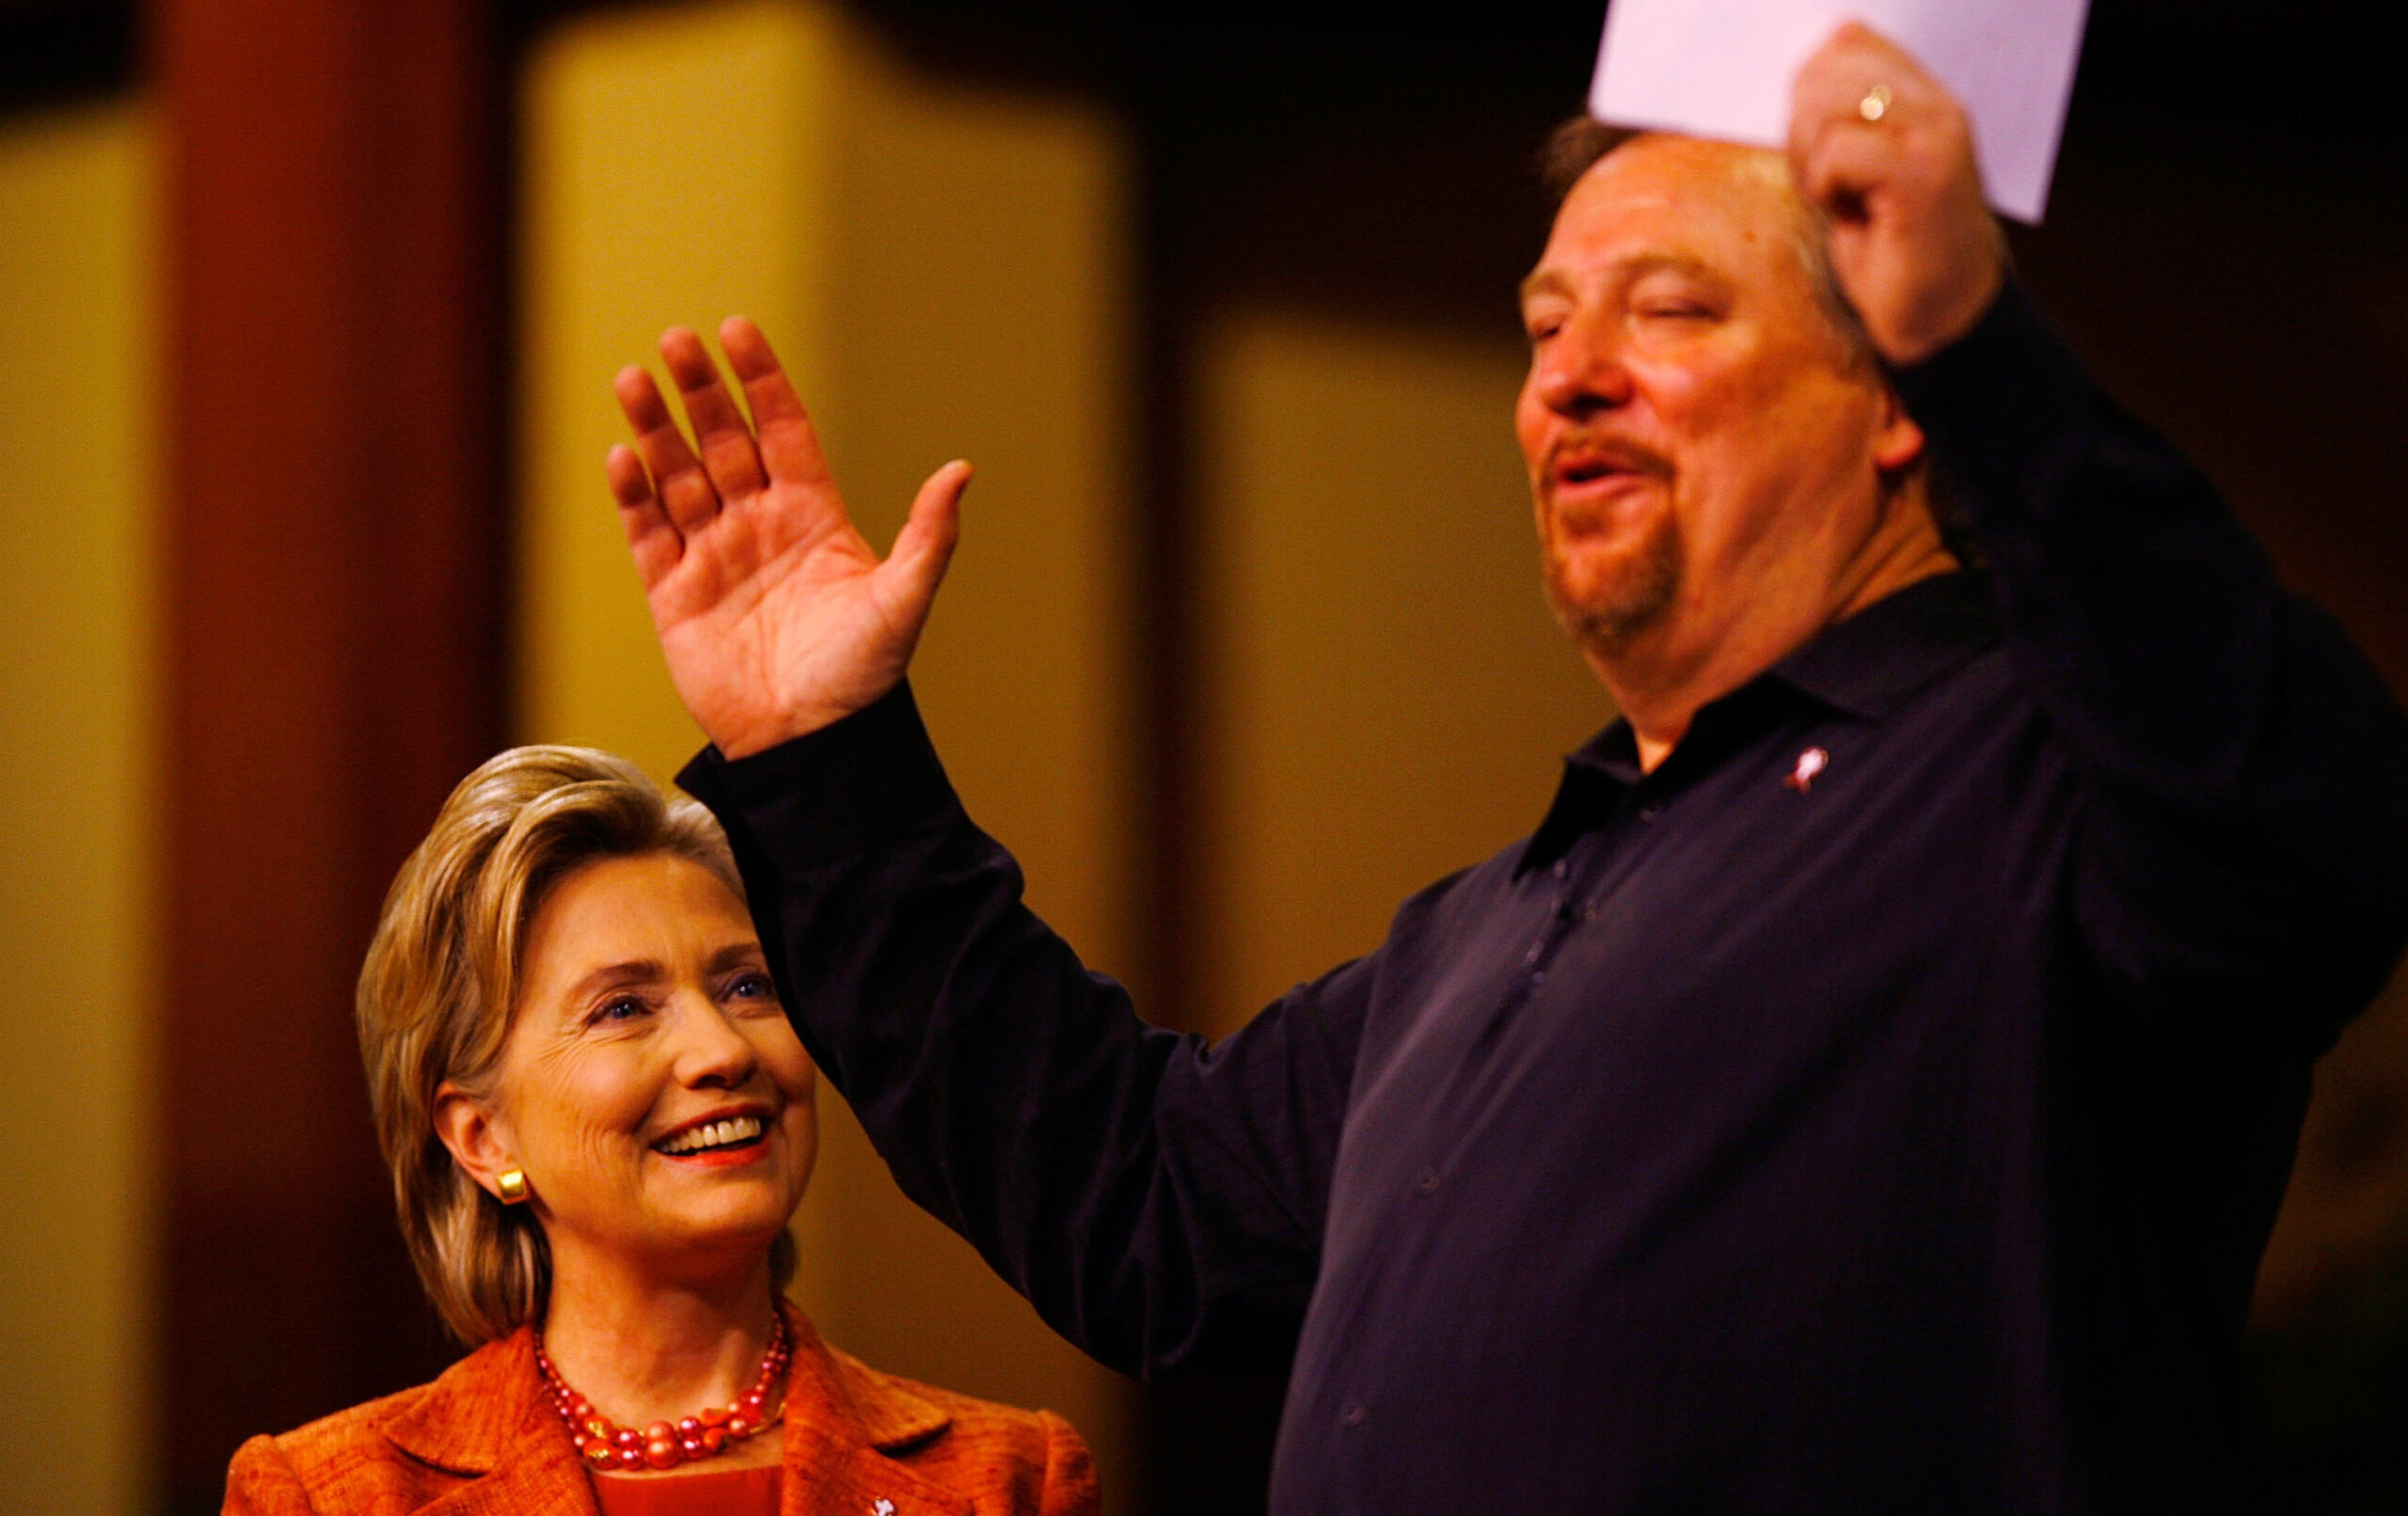 Clinton Attends Global AIDS Summit At Rick Warren's Megachurch